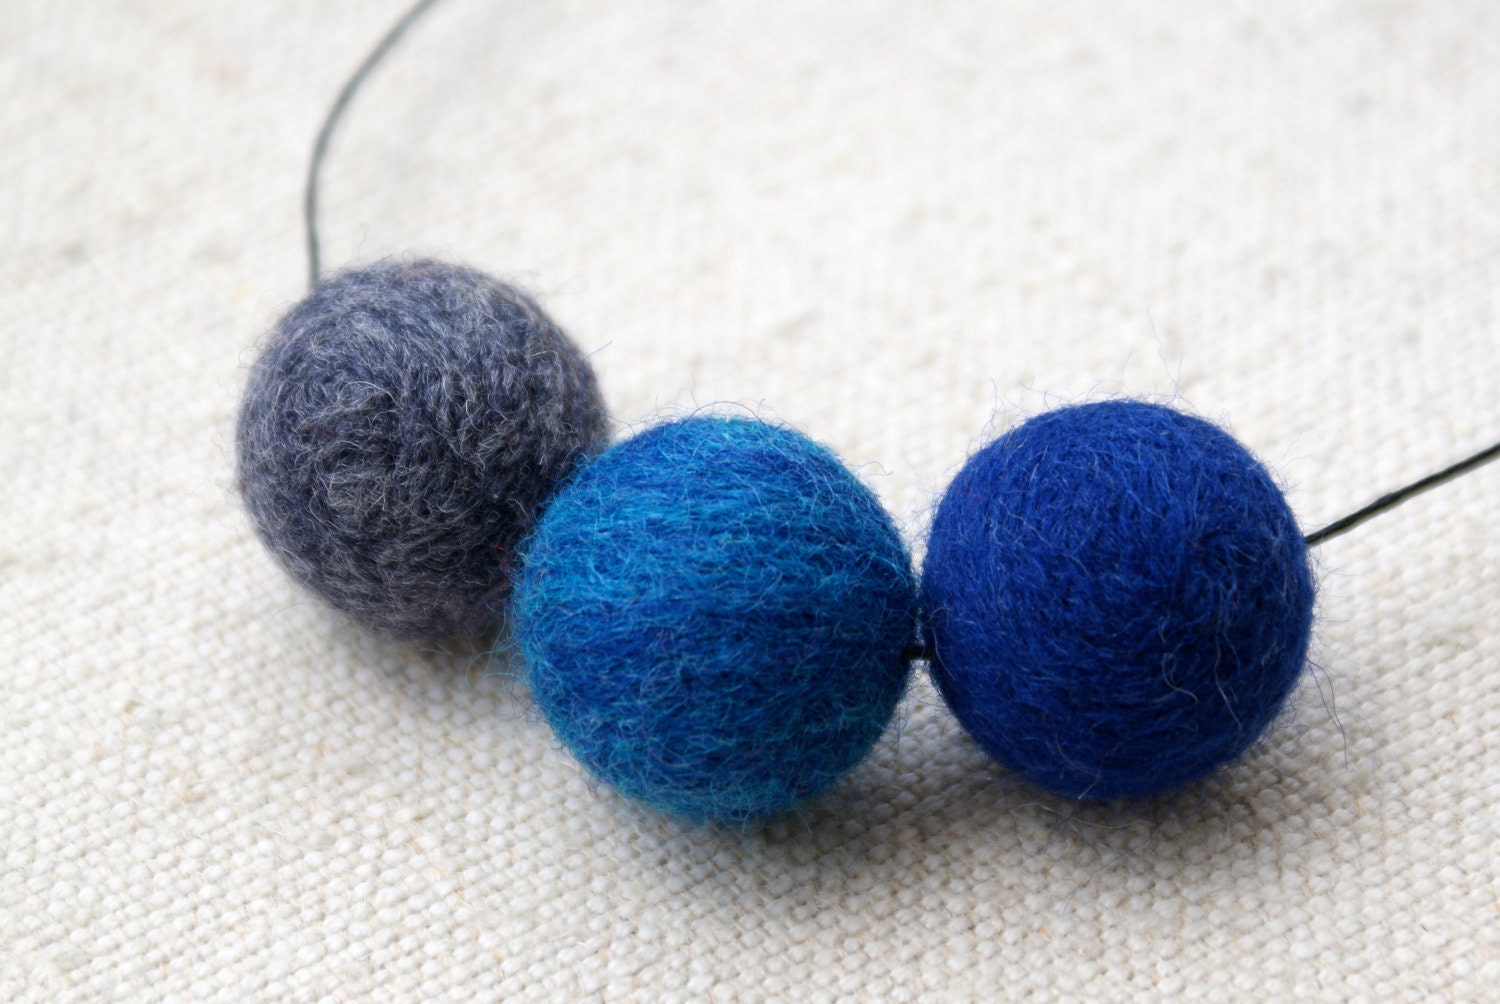 Felt Necklace / Needle felted/ ORGANIC wool jewelry / Handcrafted beads / Grey and Blue - Bohemalia